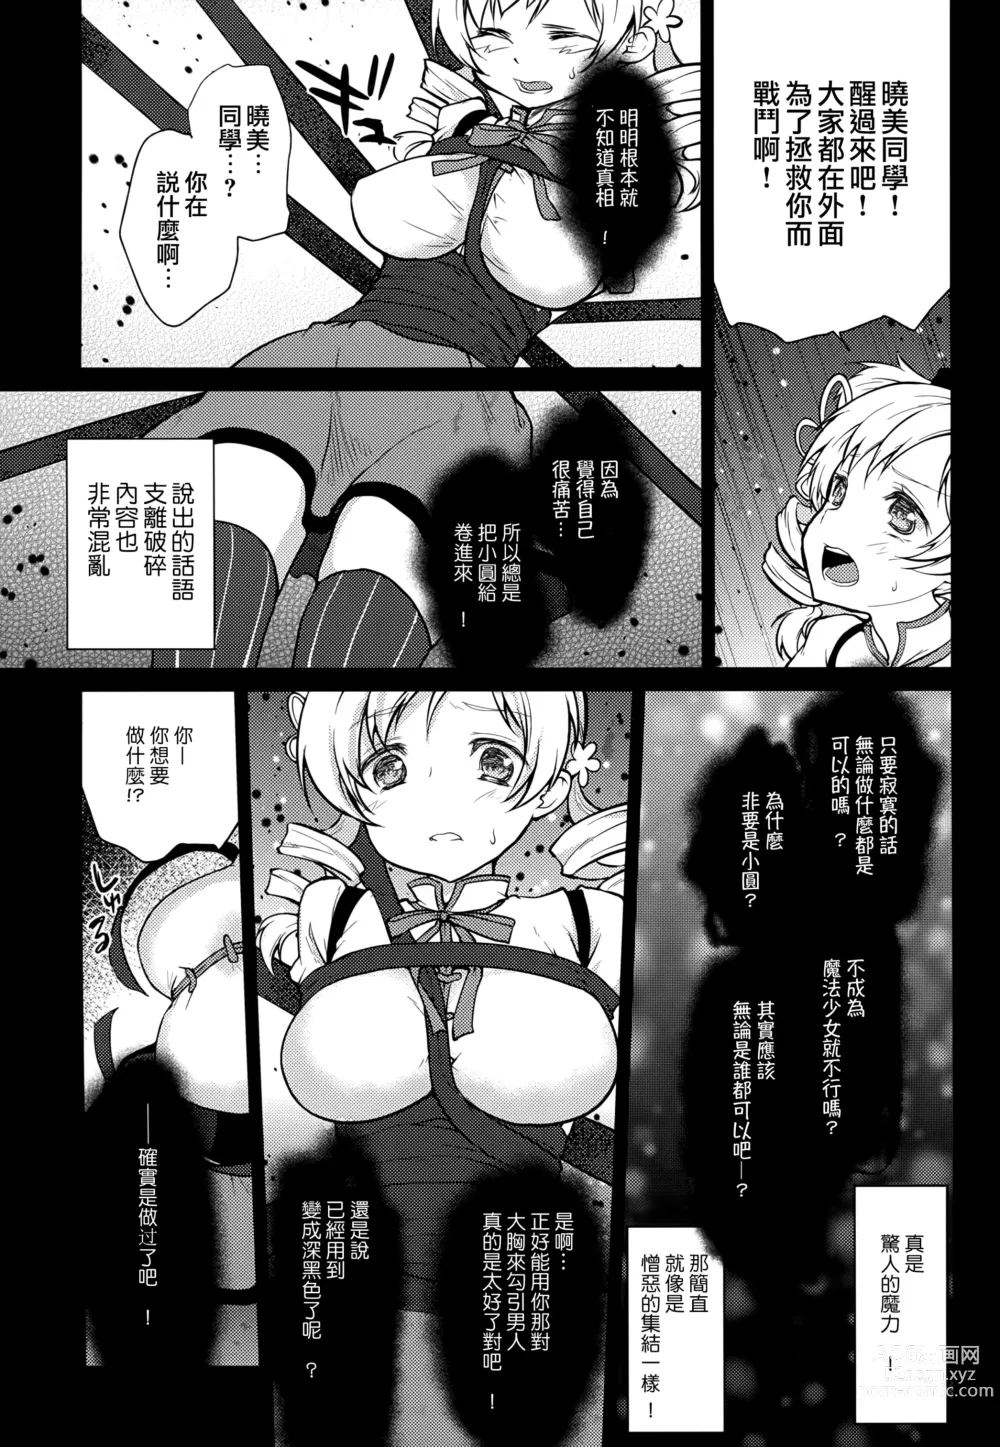 Page 6 of doujinshi 孤单一人的话很寂寞吧